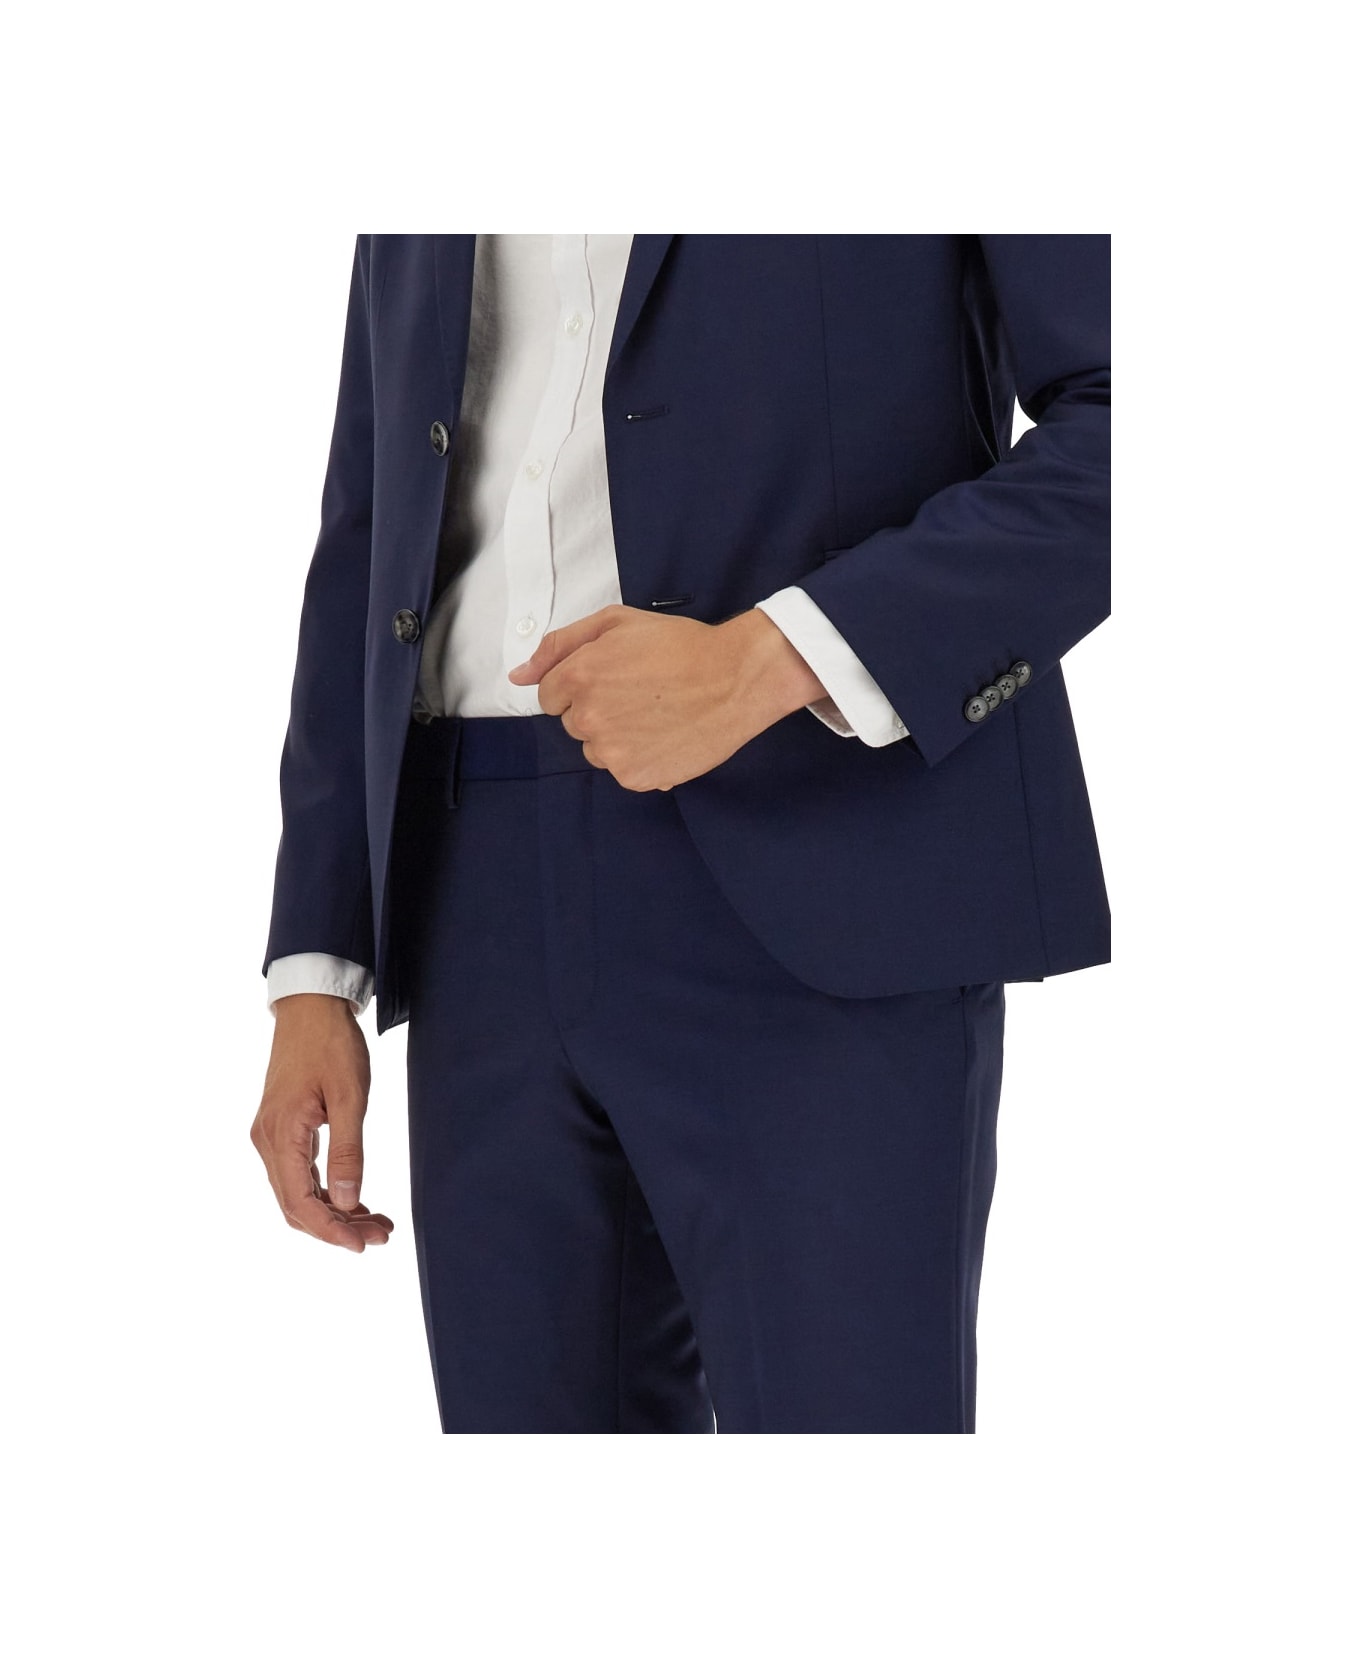 Hugo Boss H-reymond Suit - BLUE